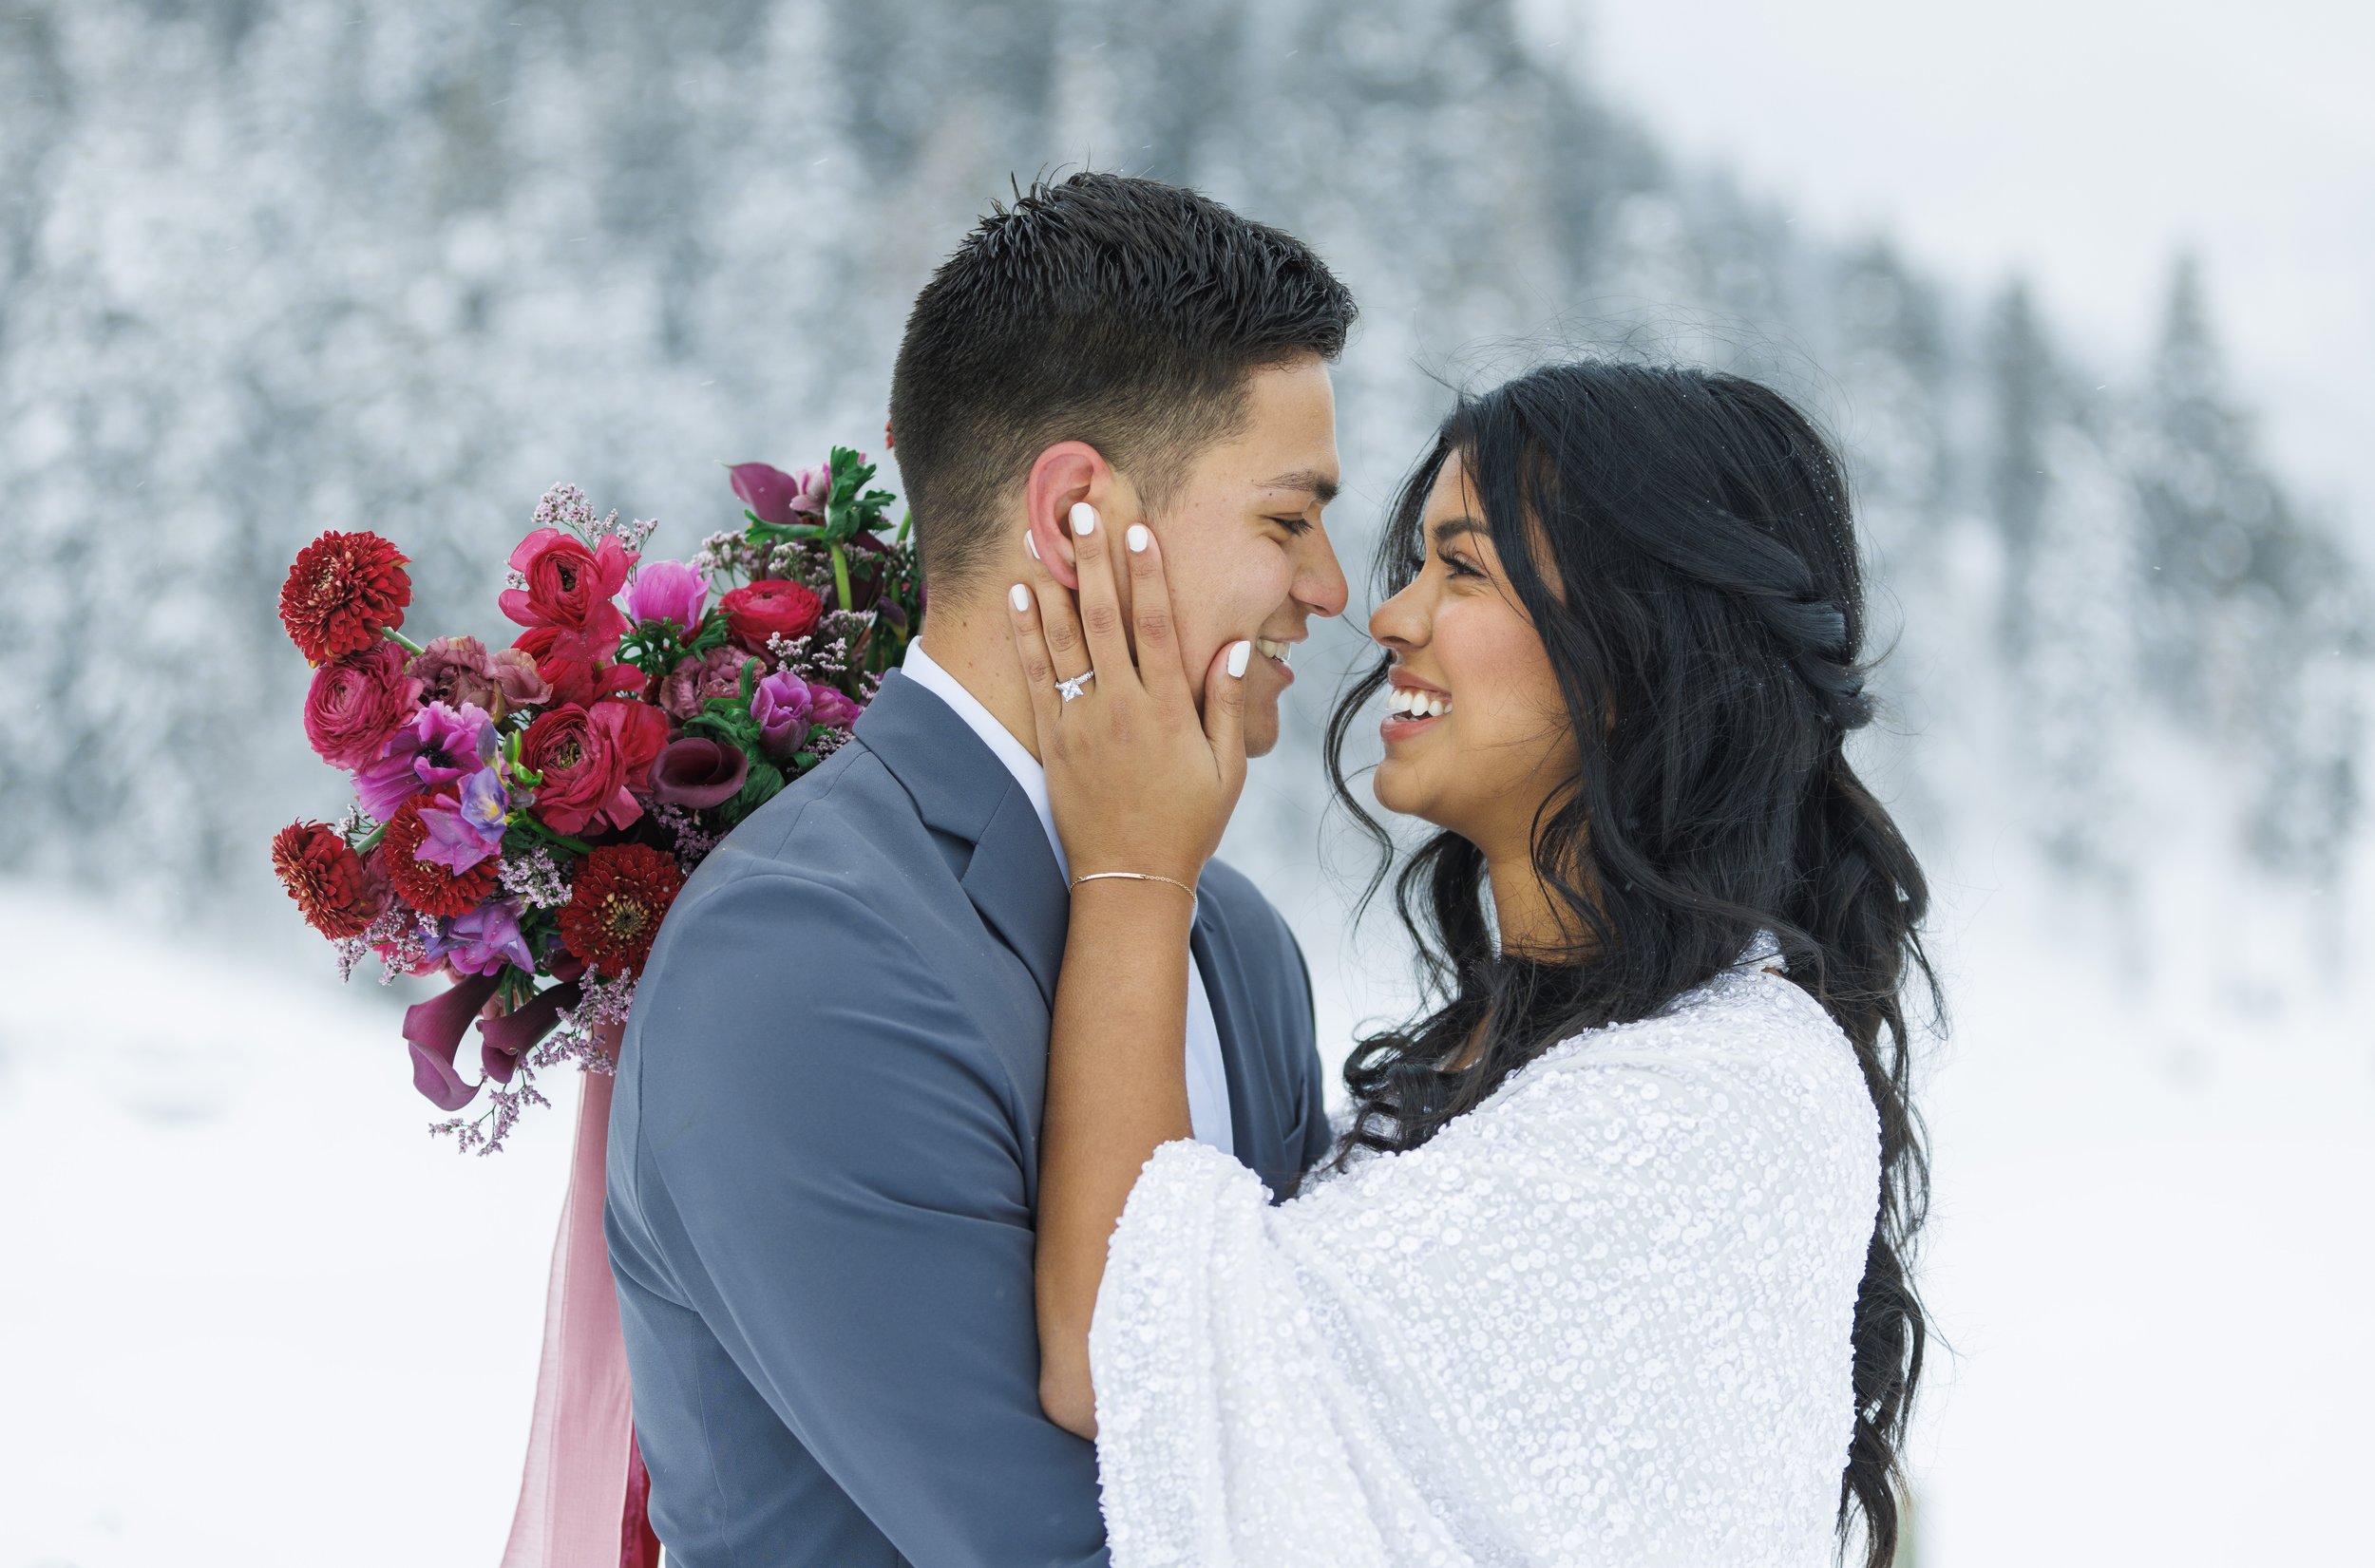  Savanna Richardson Photography captures winter mountain bridals at Tibble Fork, Utah. winter wonderland wedding #SavannaRichardsonPhotography #SavannaRichardsonBridals #WinterBridals #WinterWedding #TibbleForkBridals #UtahBridals #MountainBridals 